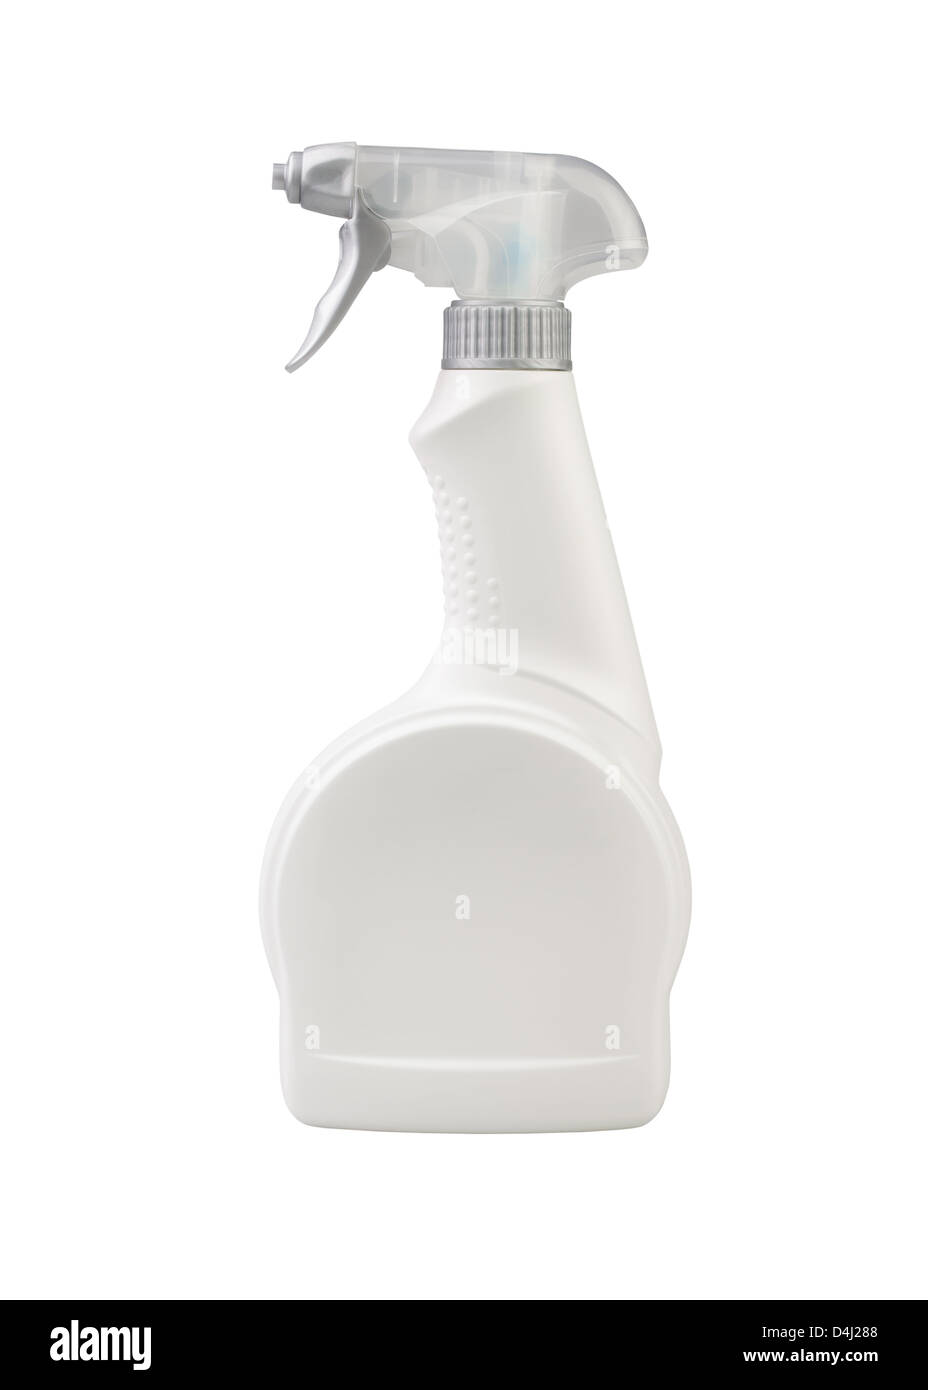 bottle spray detergent isolated on white background Stock Photo